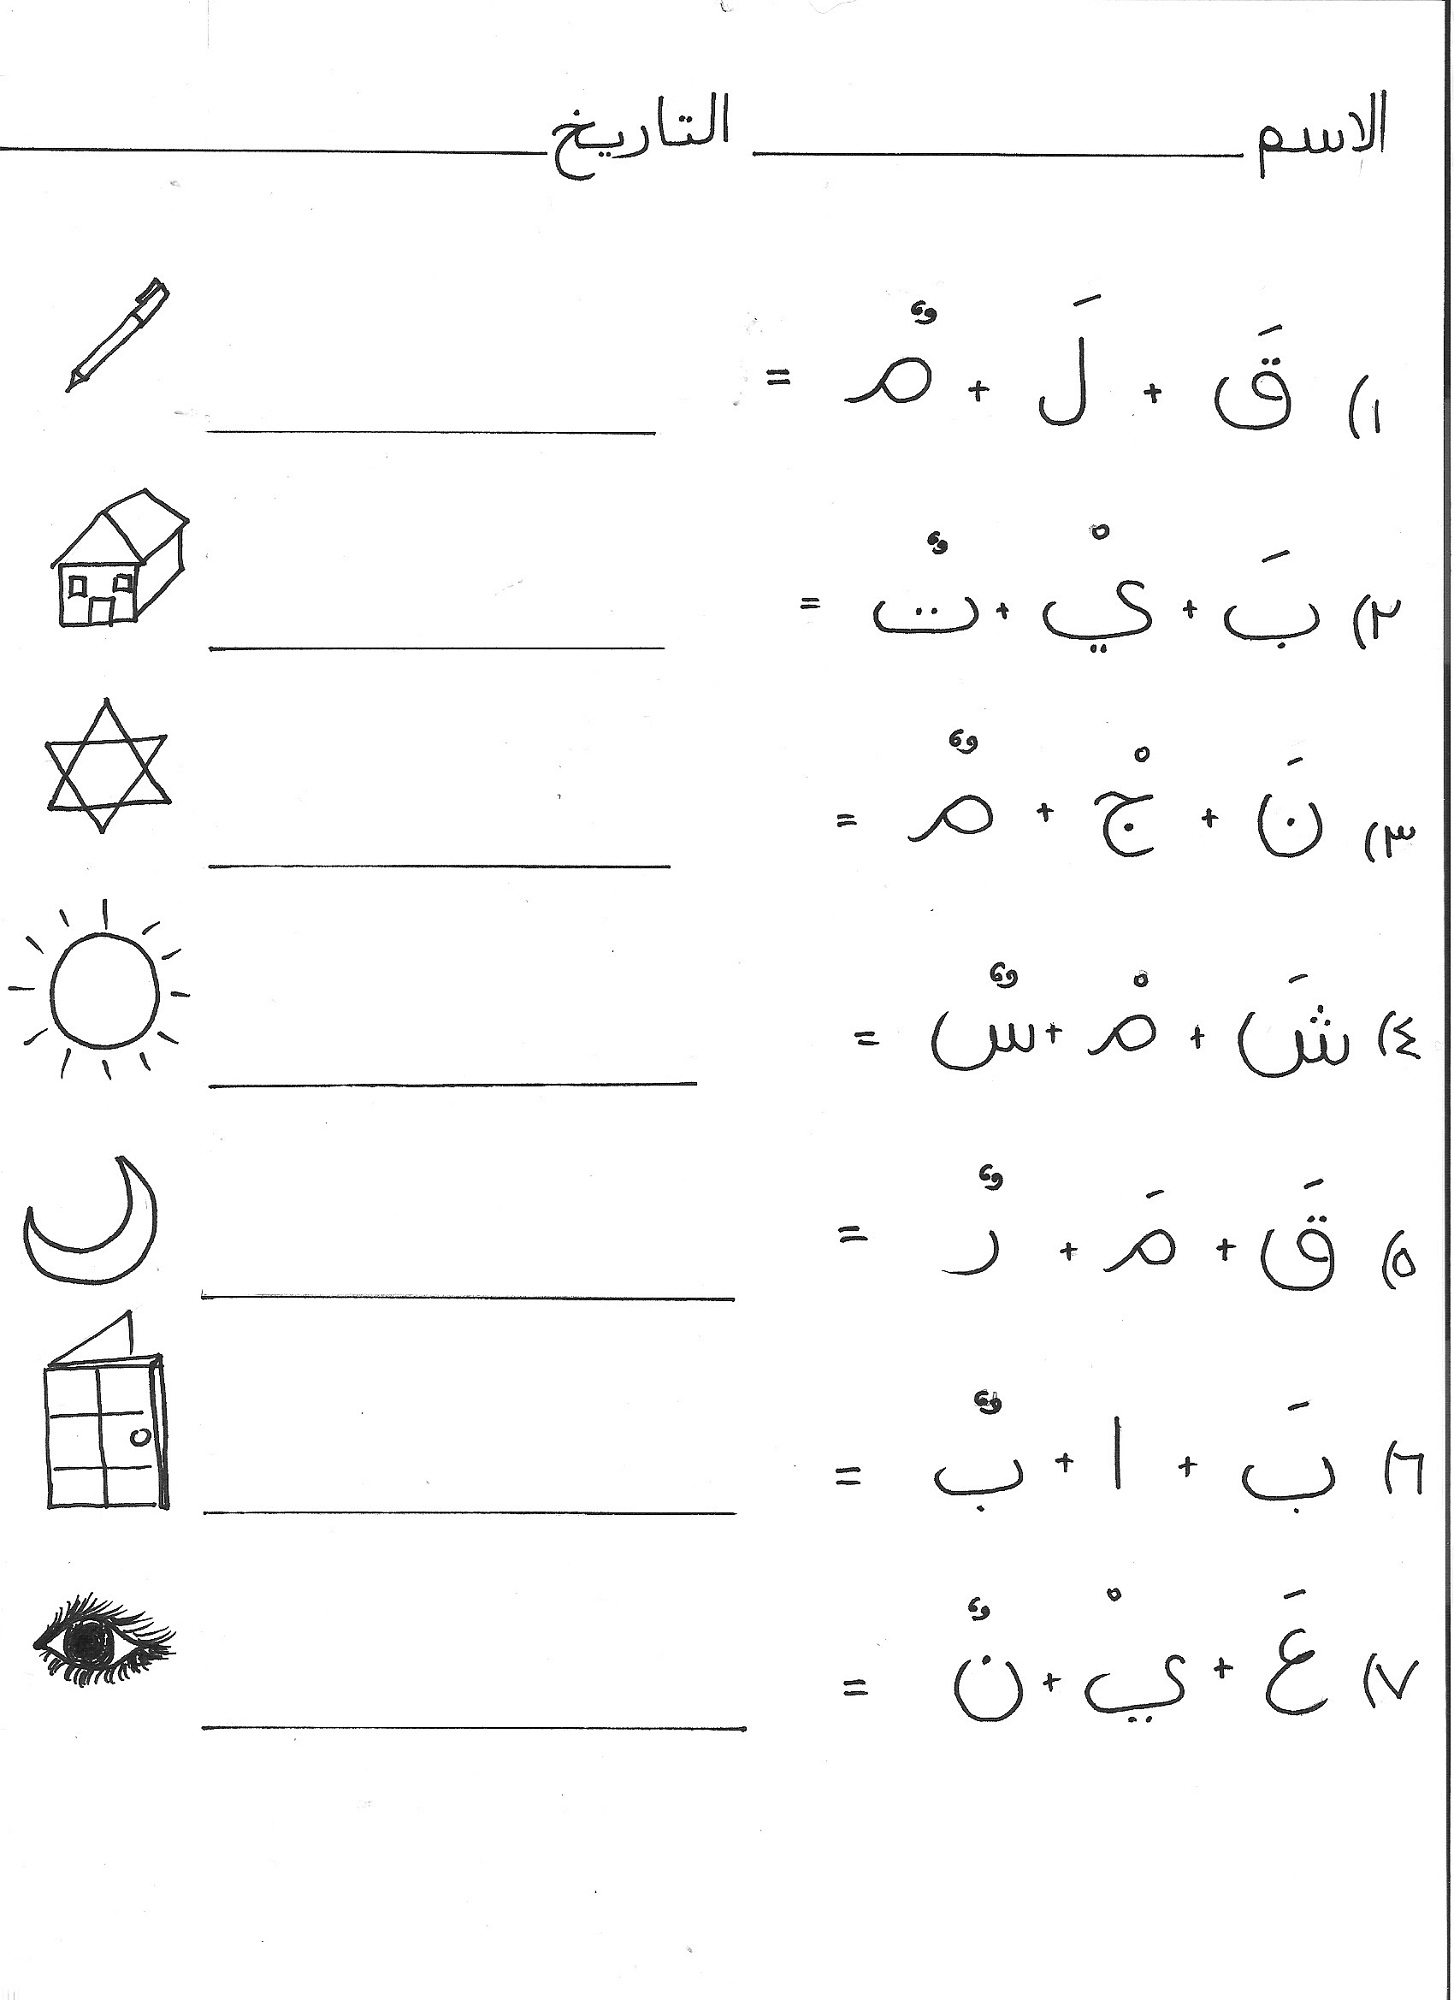 arabic-alphabet-worksheets-activity-shelter